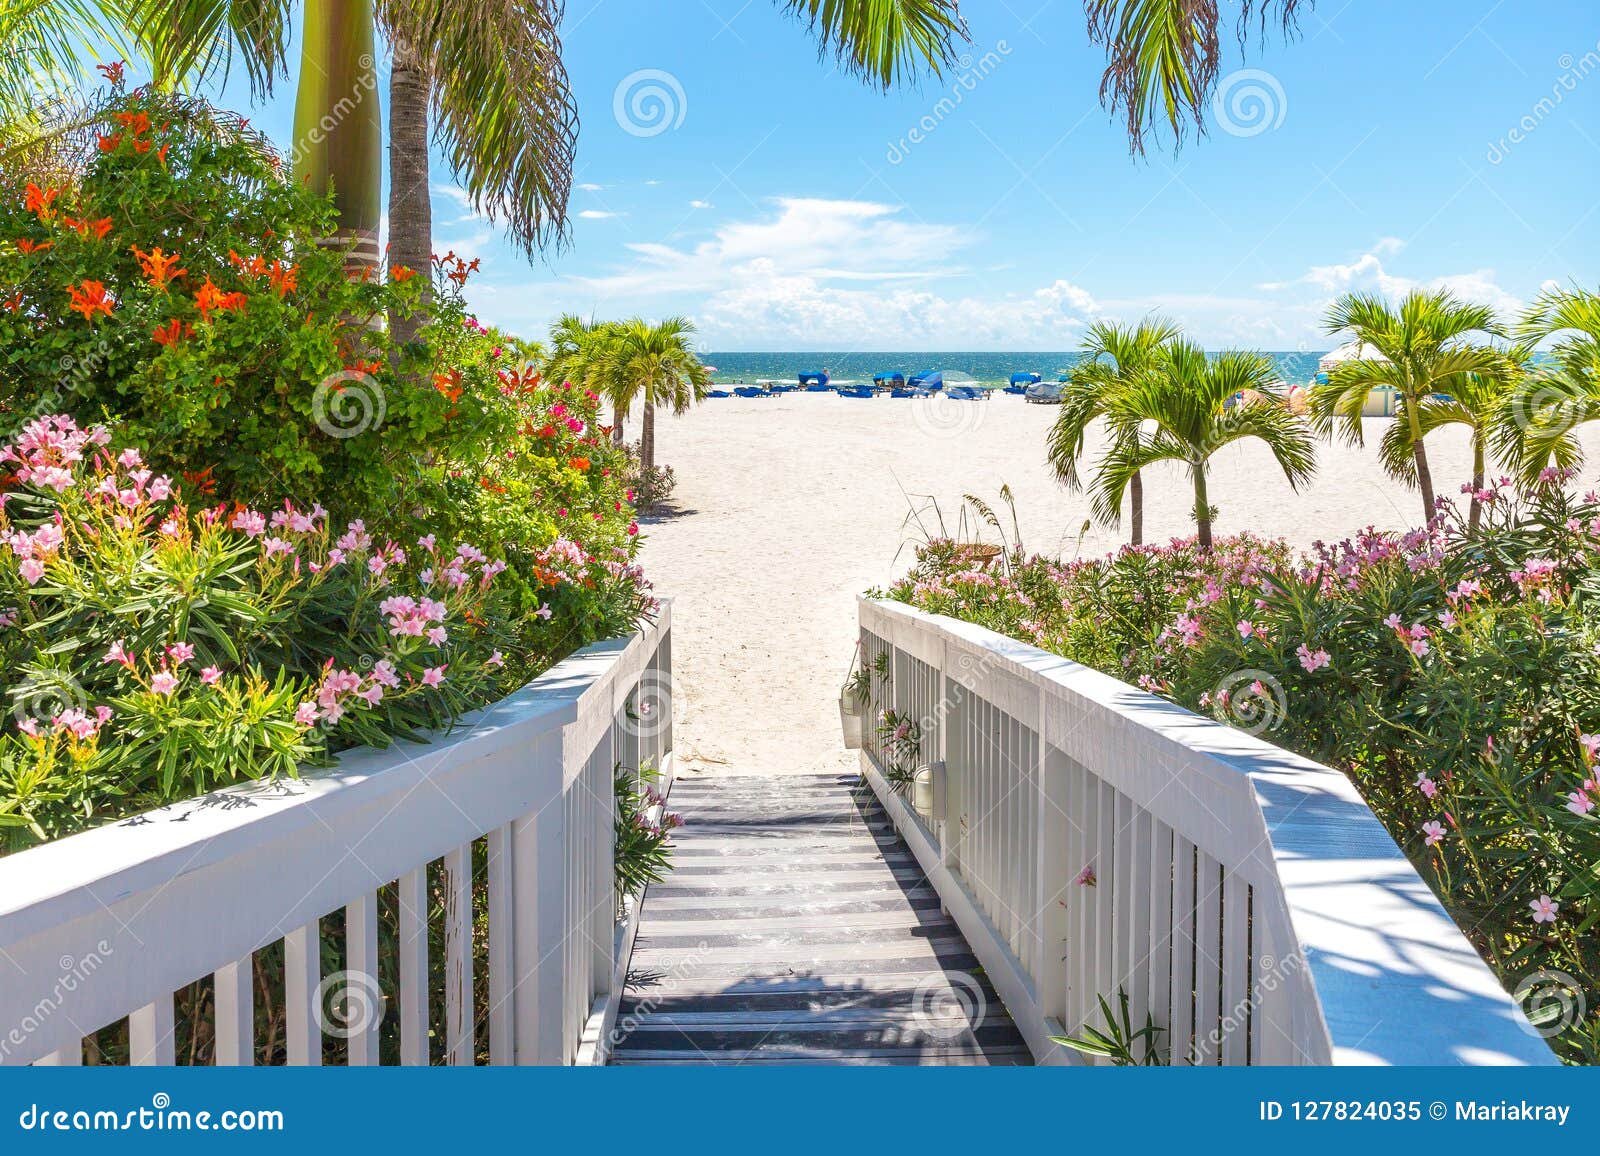 boardwalk on beach in st. pete, florida, usa